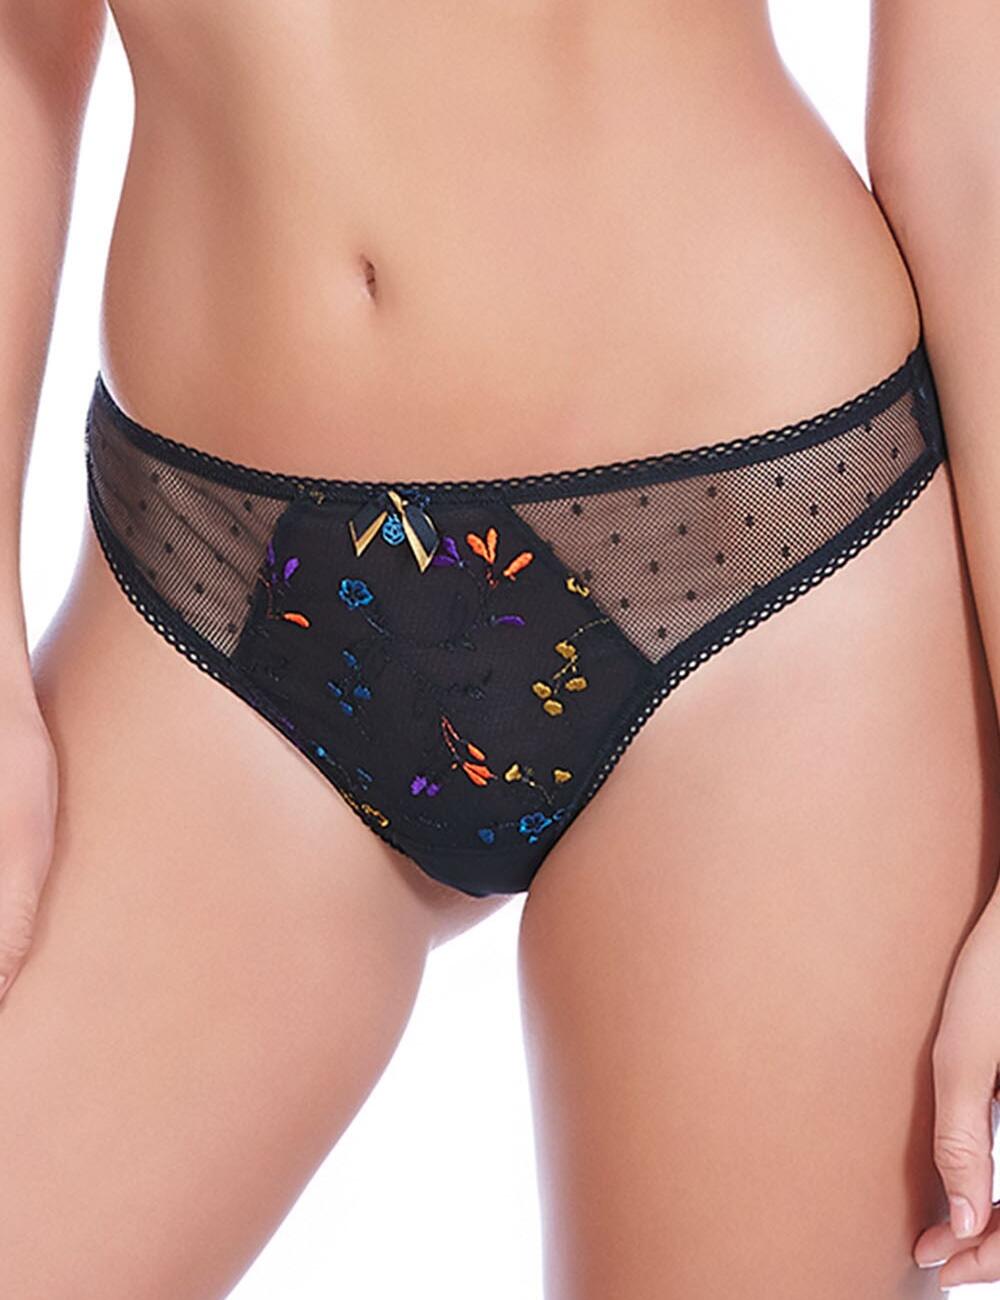 Freya Lingerie Pandora Brazilian Thong Underwear 5057 - Black